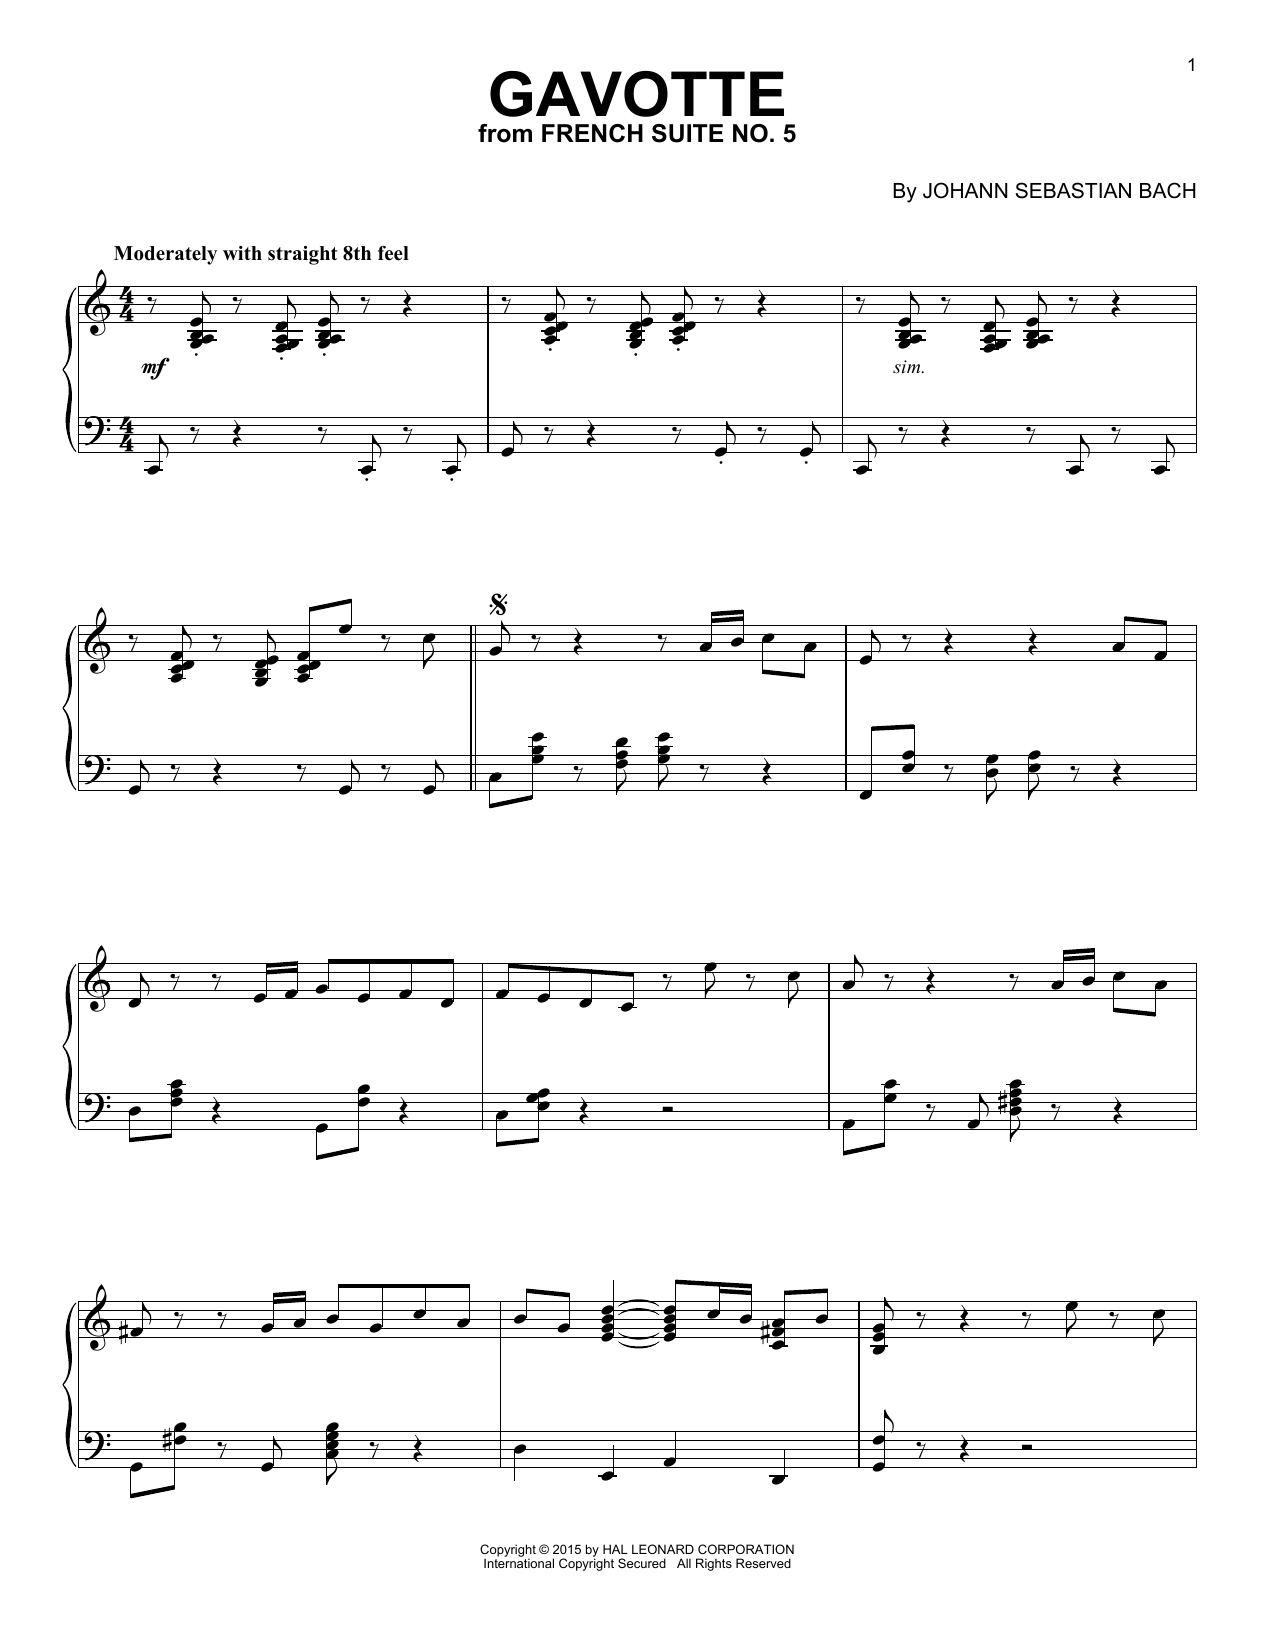 Johann Sebastian Bach Gavotte [Jazz version] Sheet Music Notes & Chords for Piano - Download or Print PDF